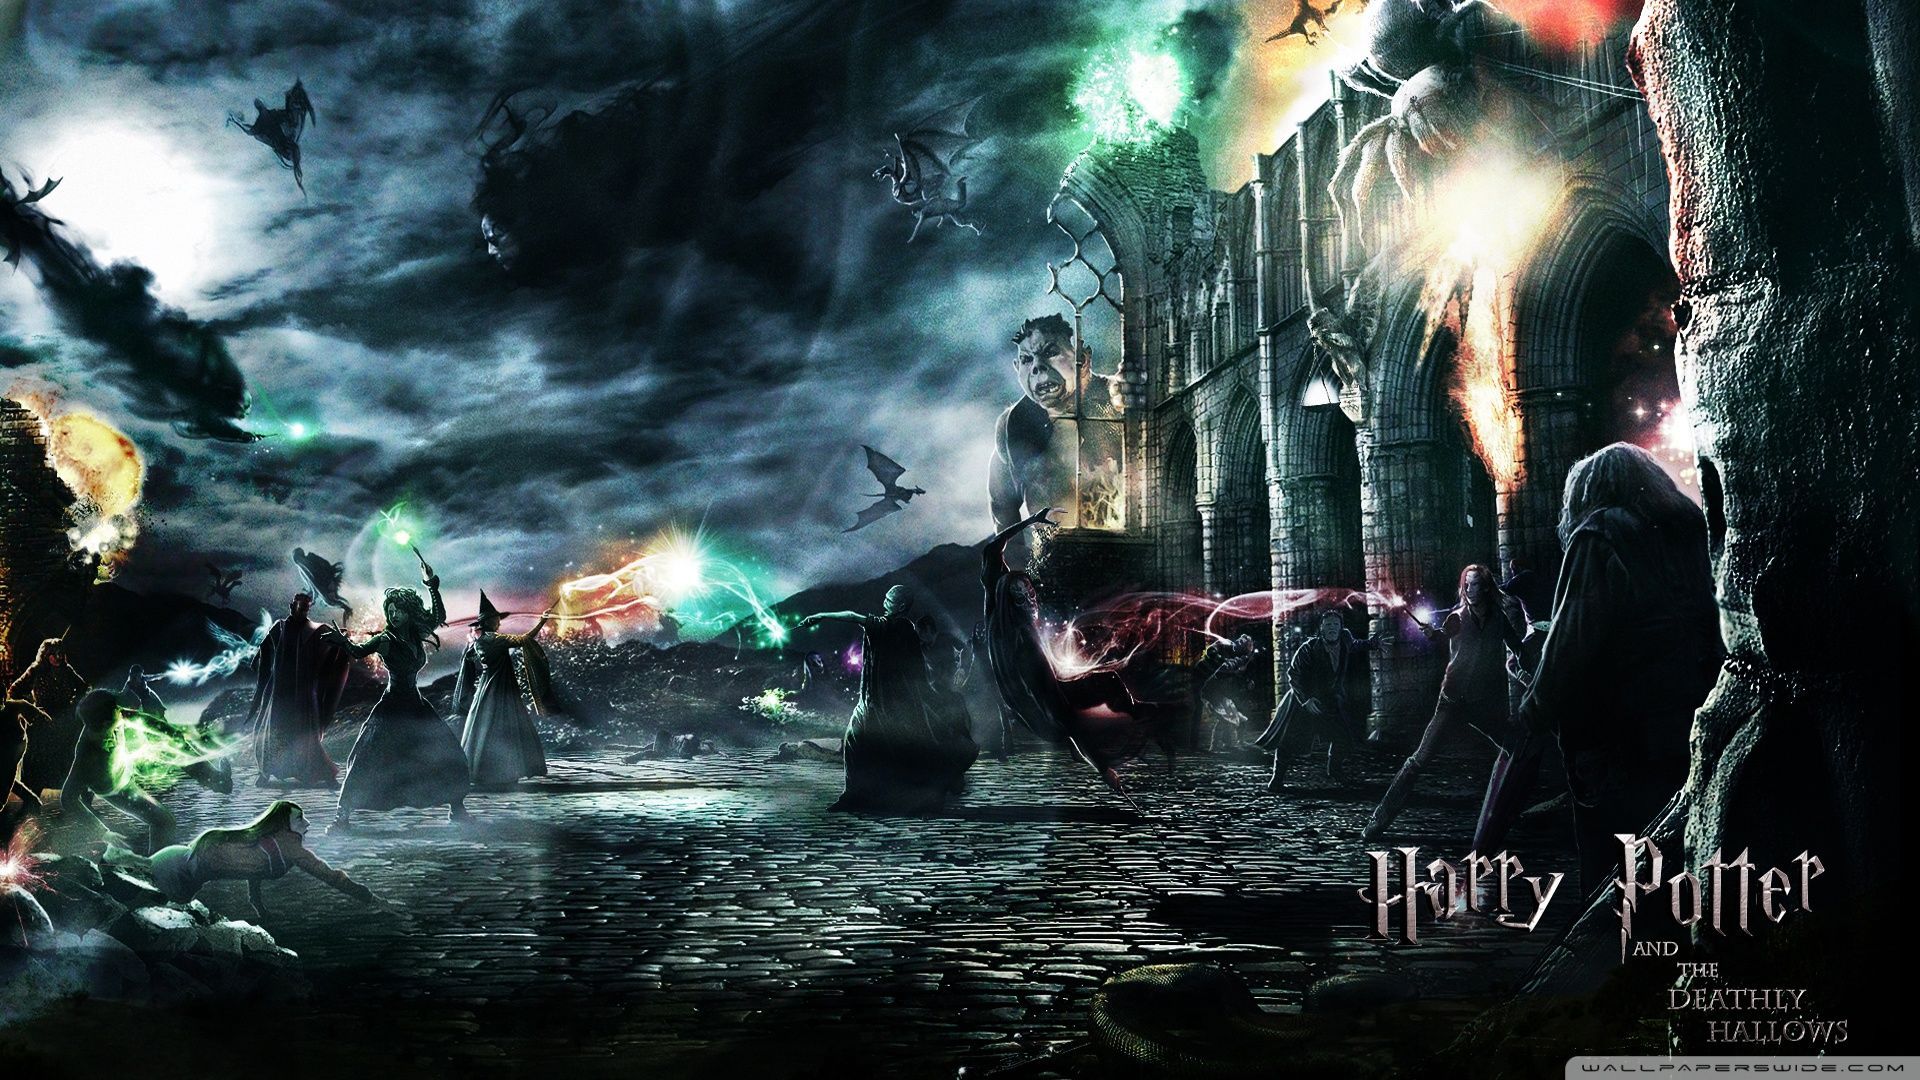 Battle of Hogwarts. Harry potter wallpaper, Deathly hallows wallpaper, Harry potter background